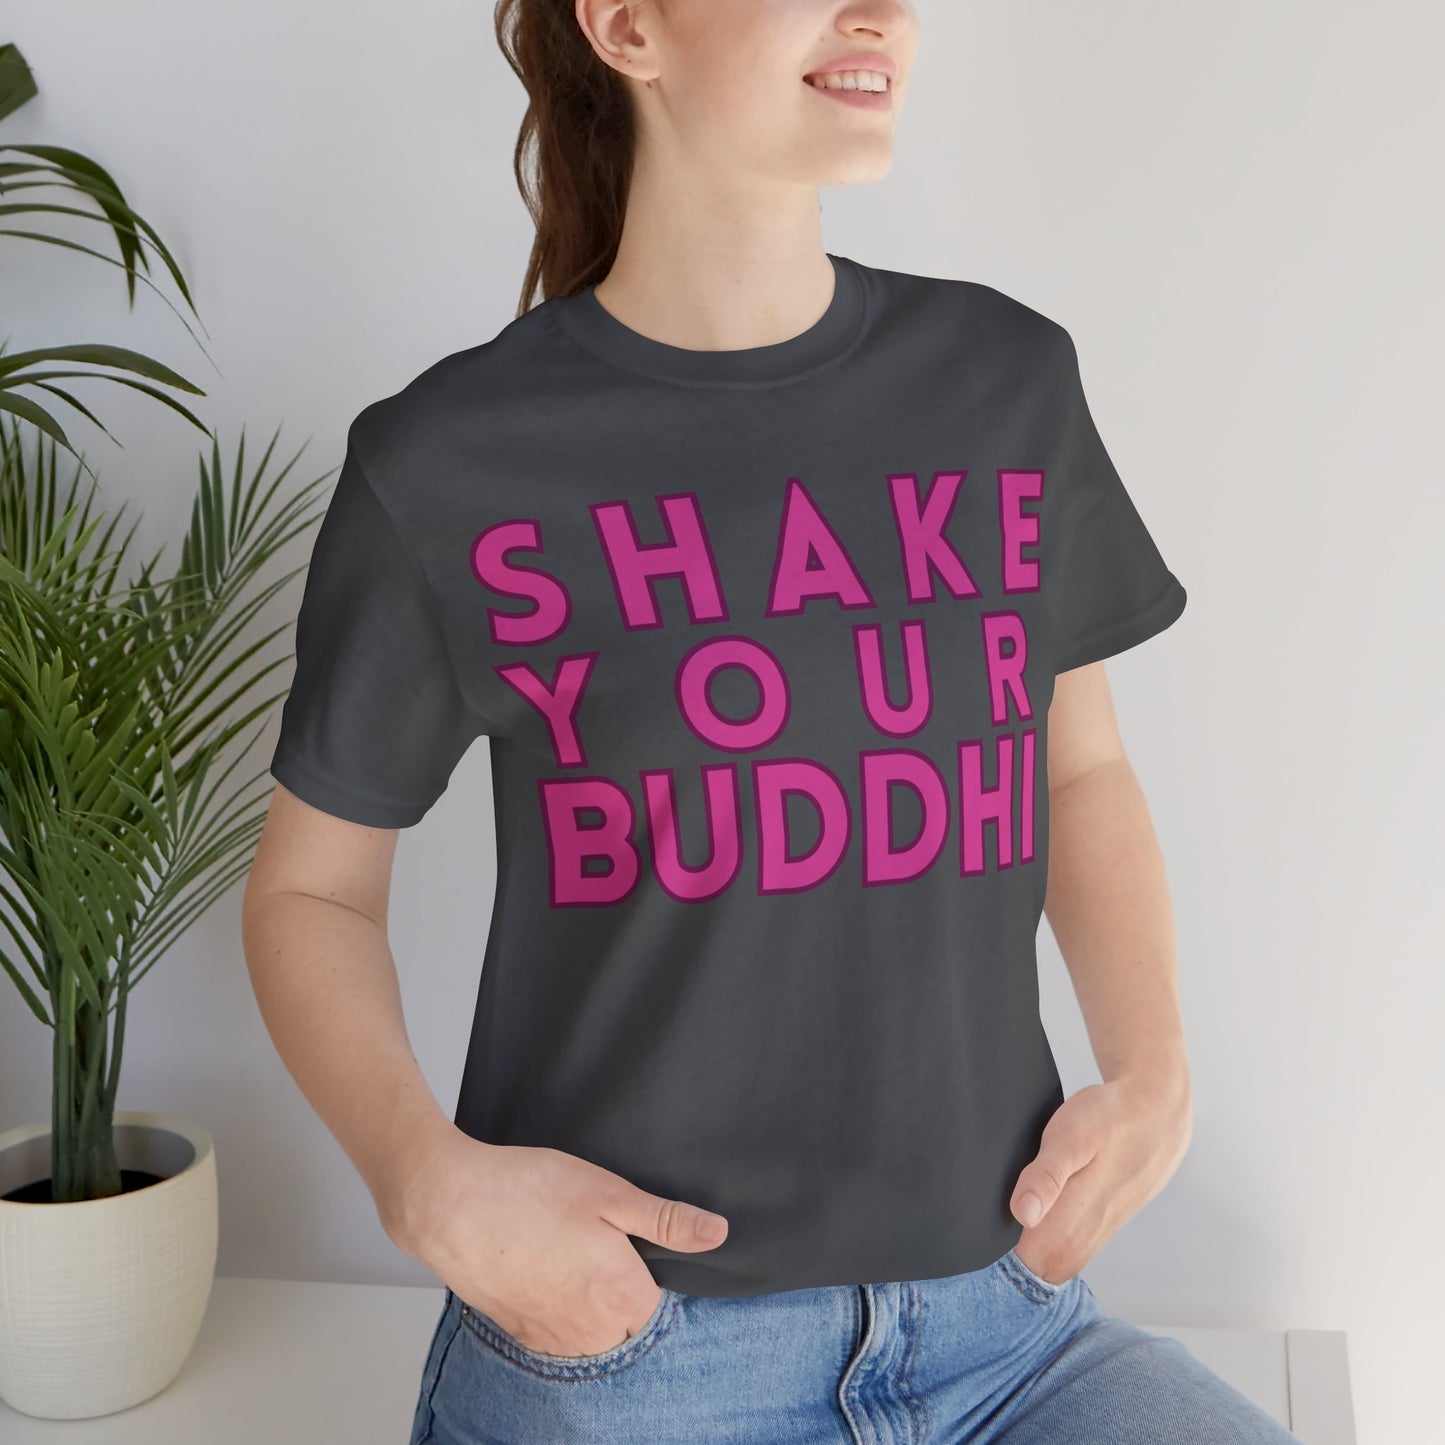 Shake Your Buddhi T-Shirt - Arjuna Rigby Art and Lifestyle Store